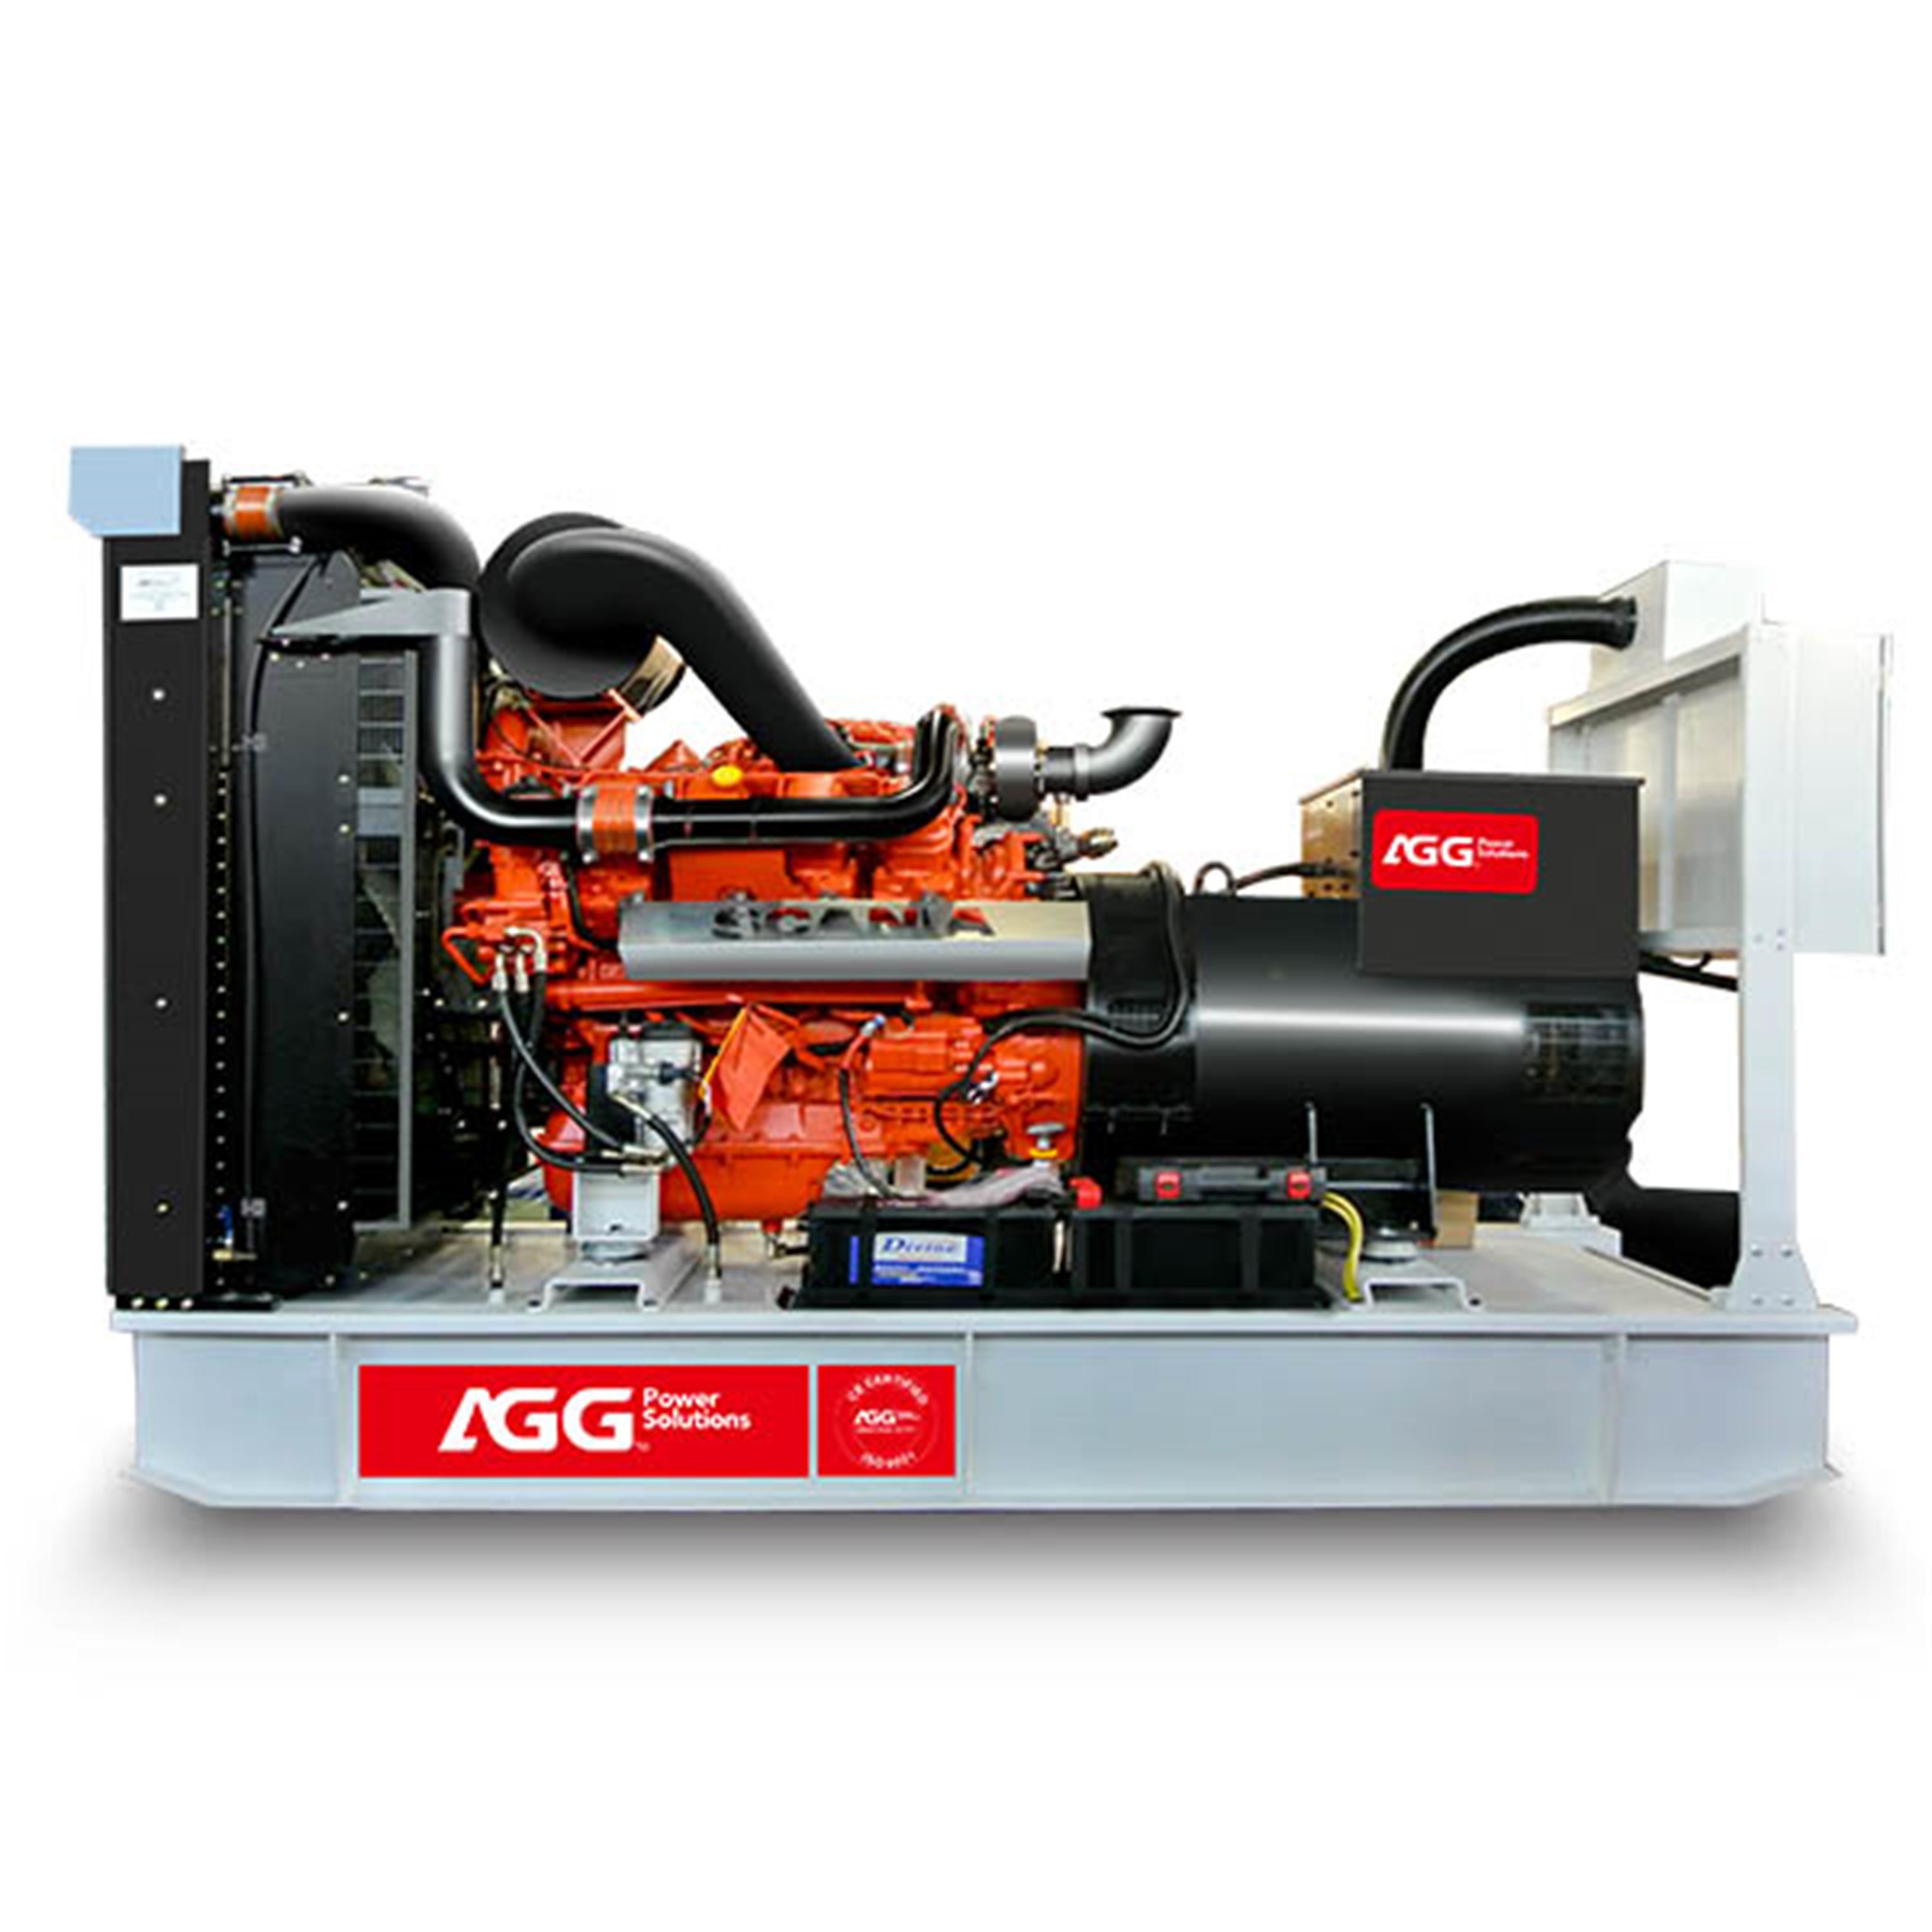 S500E5-50HZ - AGG Power Technology (UK) CO., LTD.